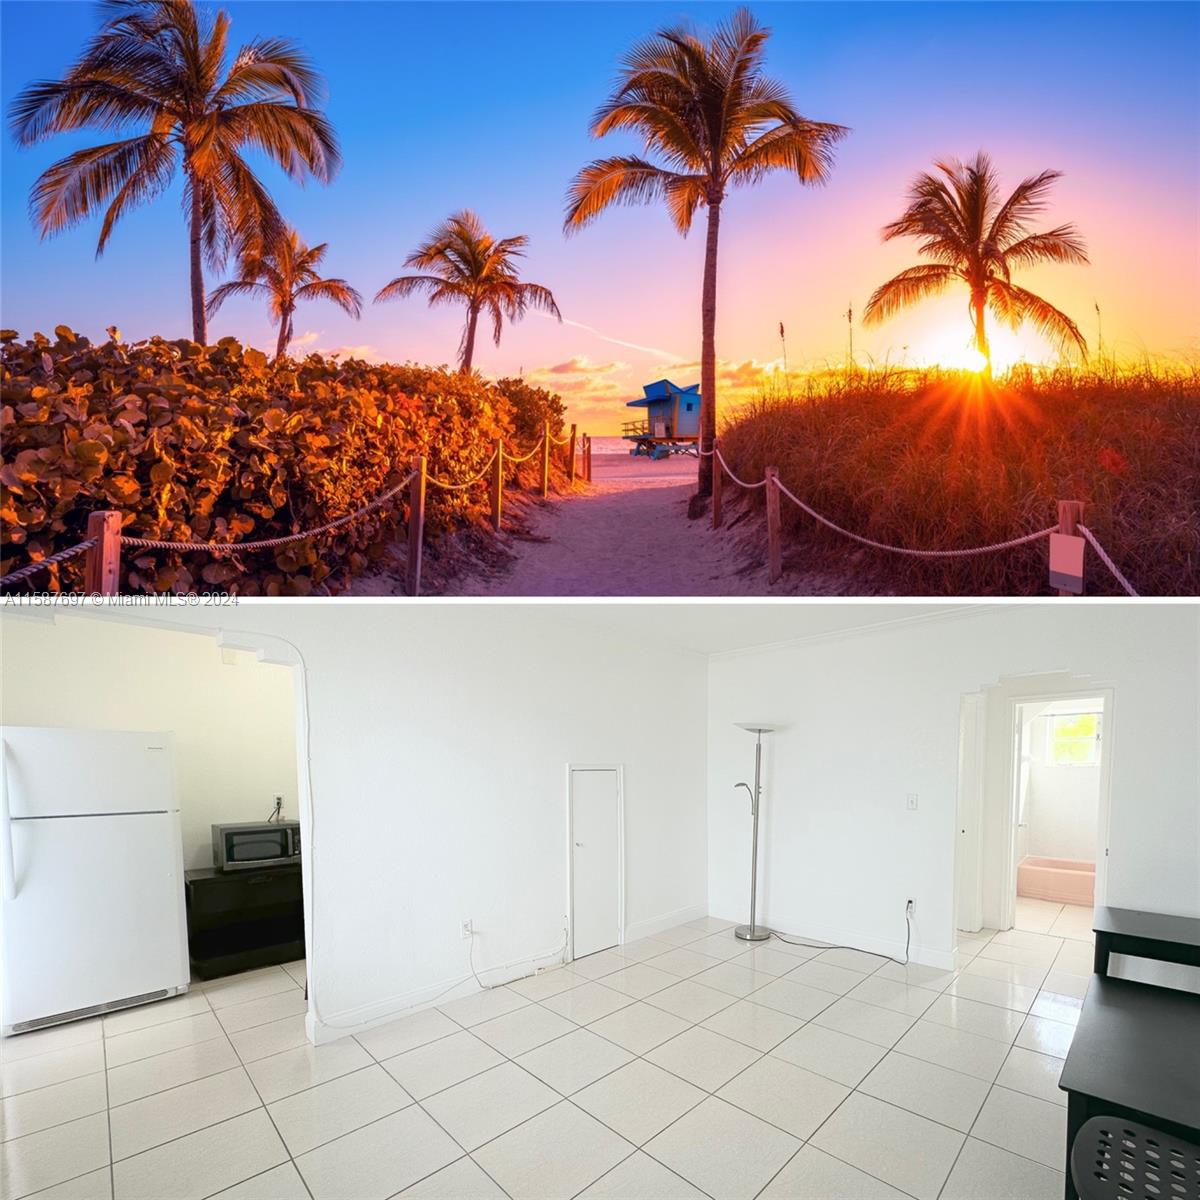 Rental Property at 7435 Harding Ave 203, Miami Beach, Miami-Dade County, Florida - Bedrooms: 1 
Bathrooms: 1  - $1,850 MO.